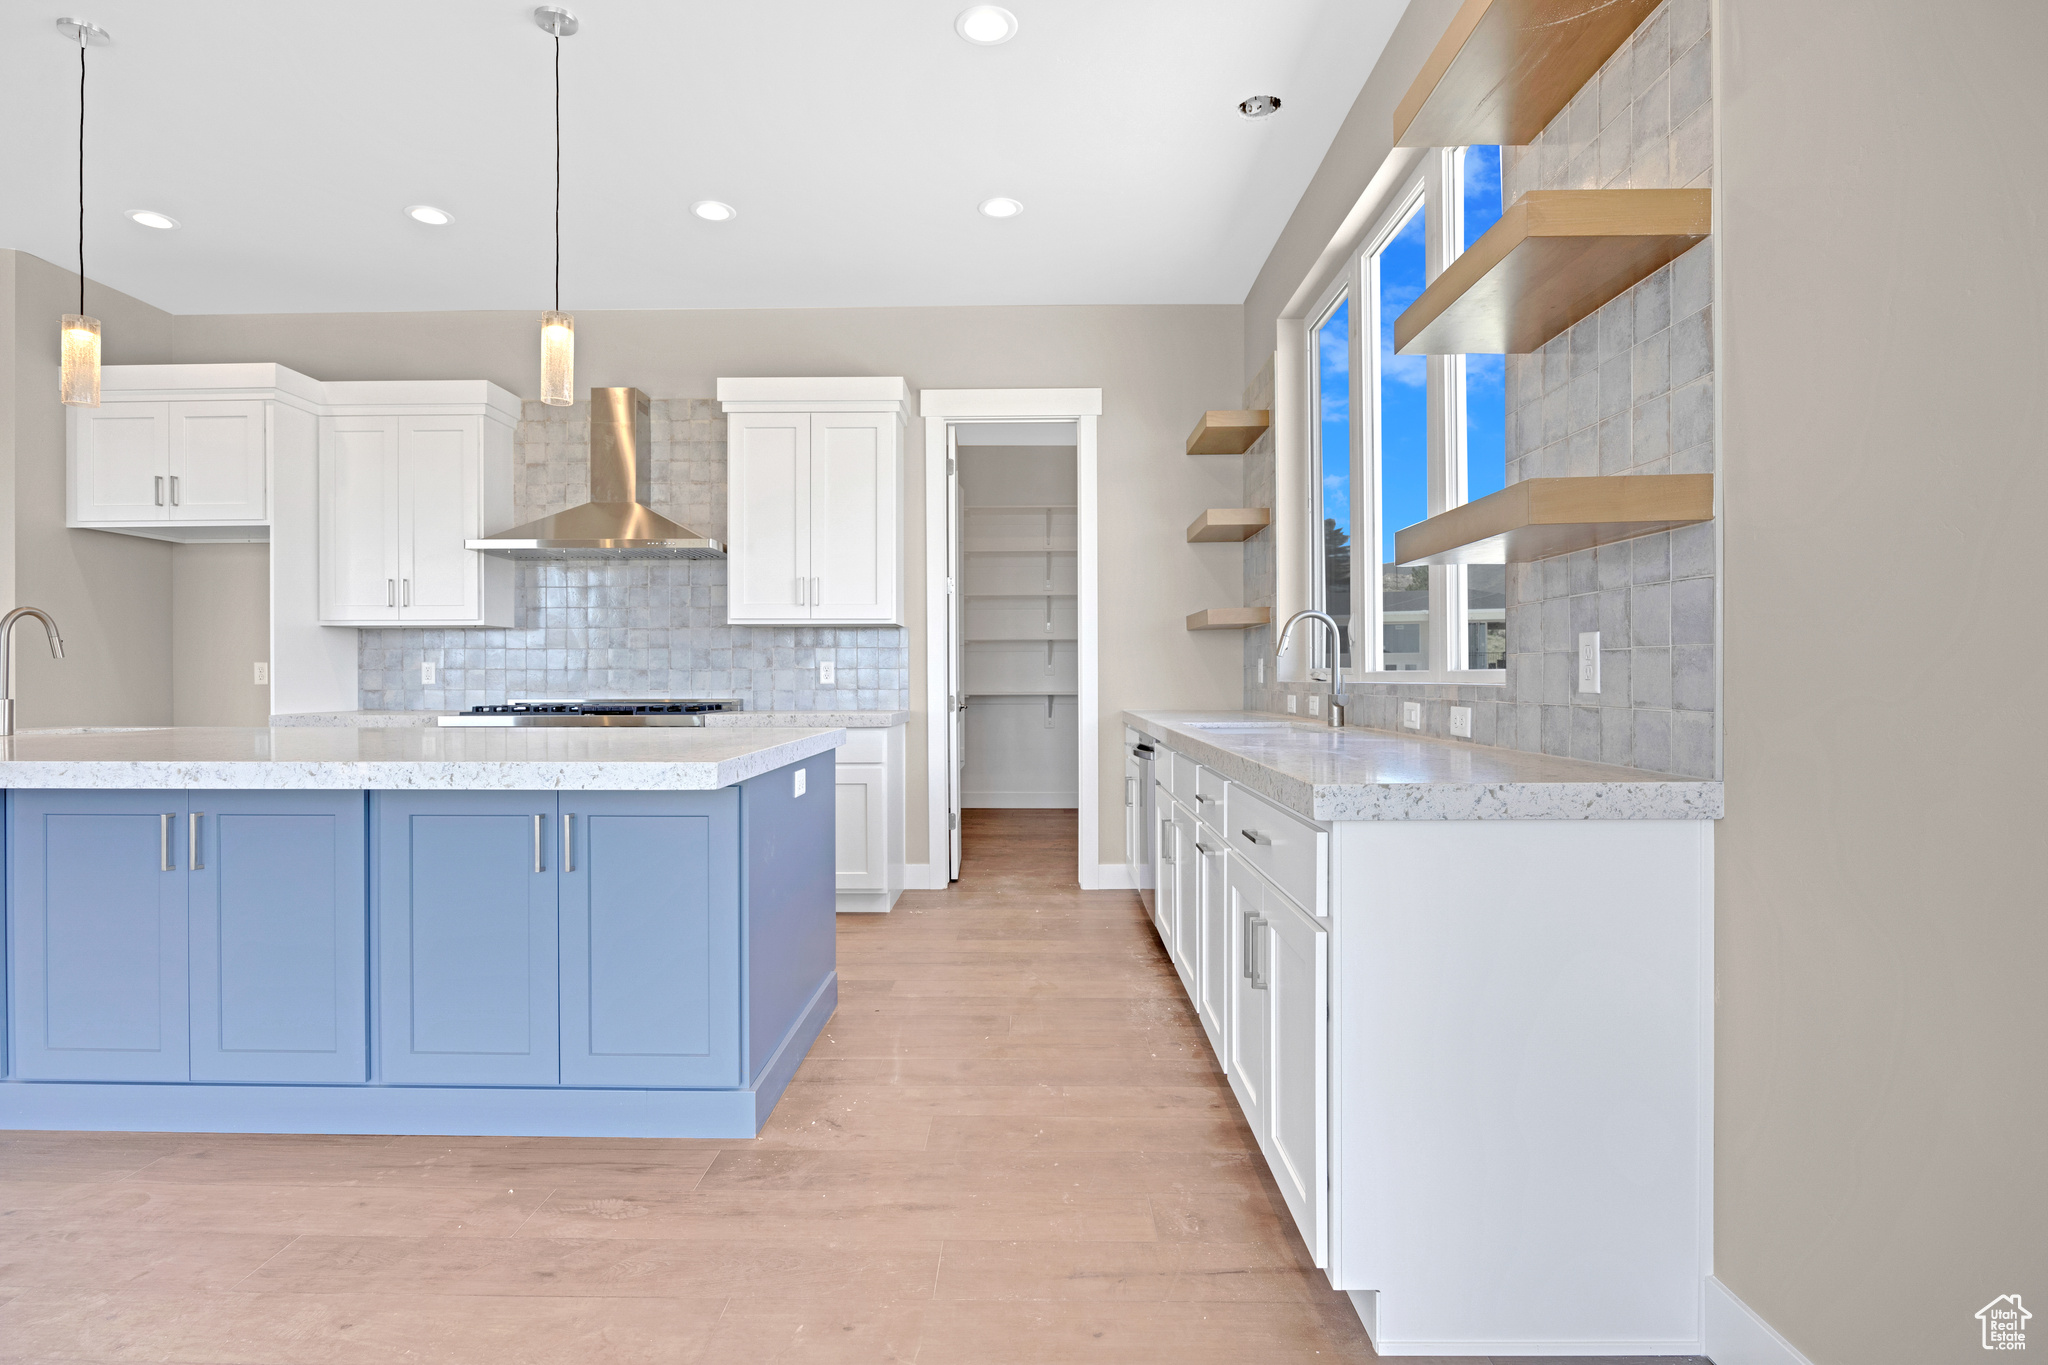 Kitchen with light hardwood / wood-style flooring, tasteful backsplash, wall chimney exhaust hood, and white cabinetry